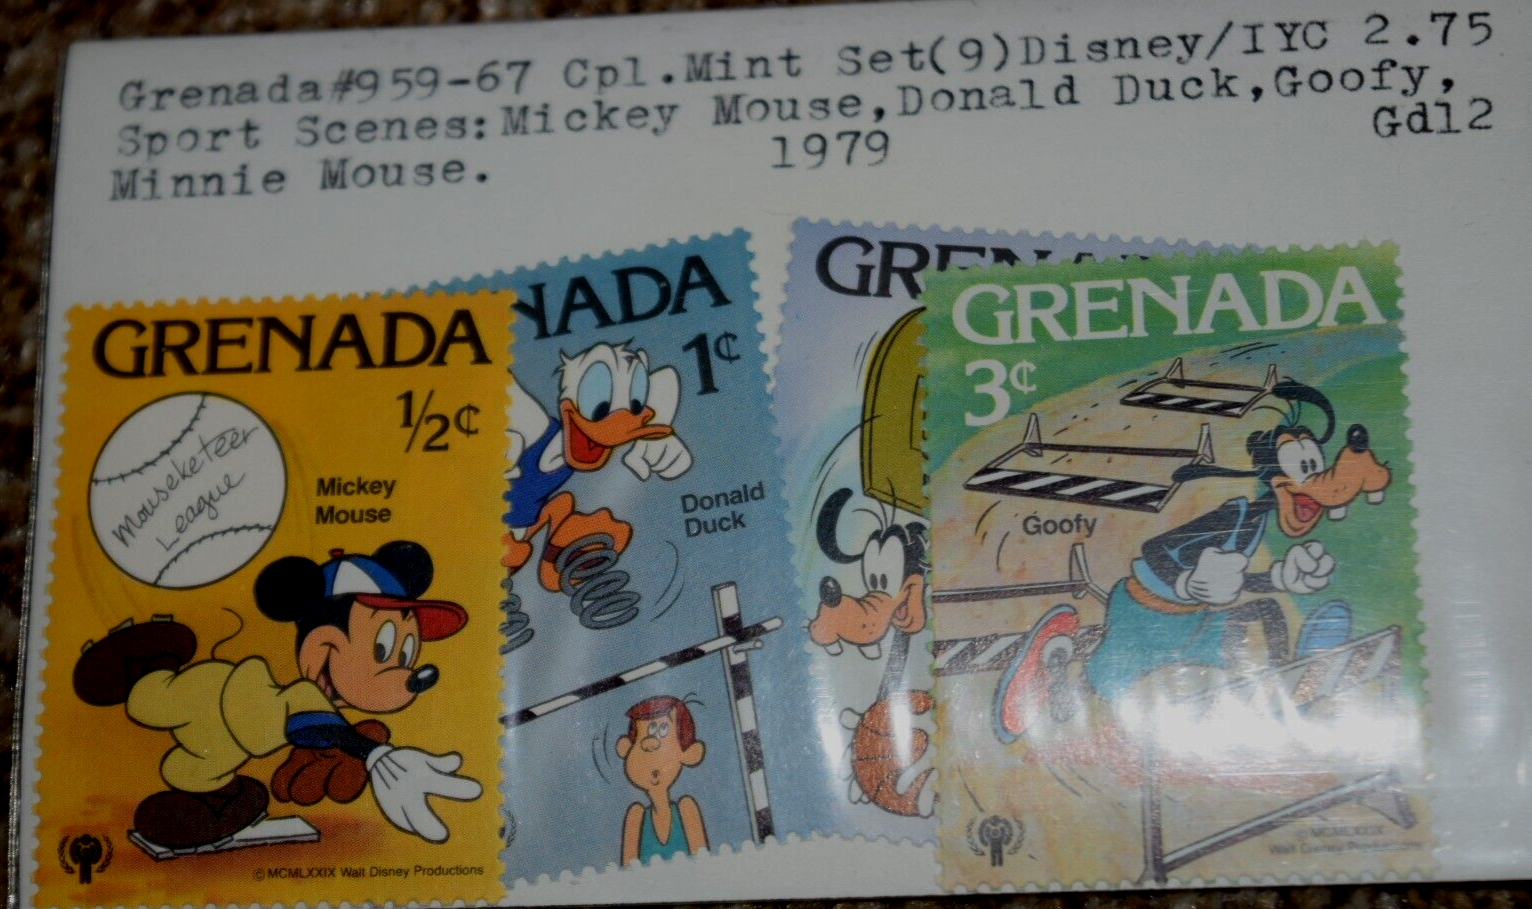 GRENADA, DISNEY Mint Set (9) #959-67, "SPORTS SCENES - Mickey, Goofy,"  1979 Без бренда - фотография #2